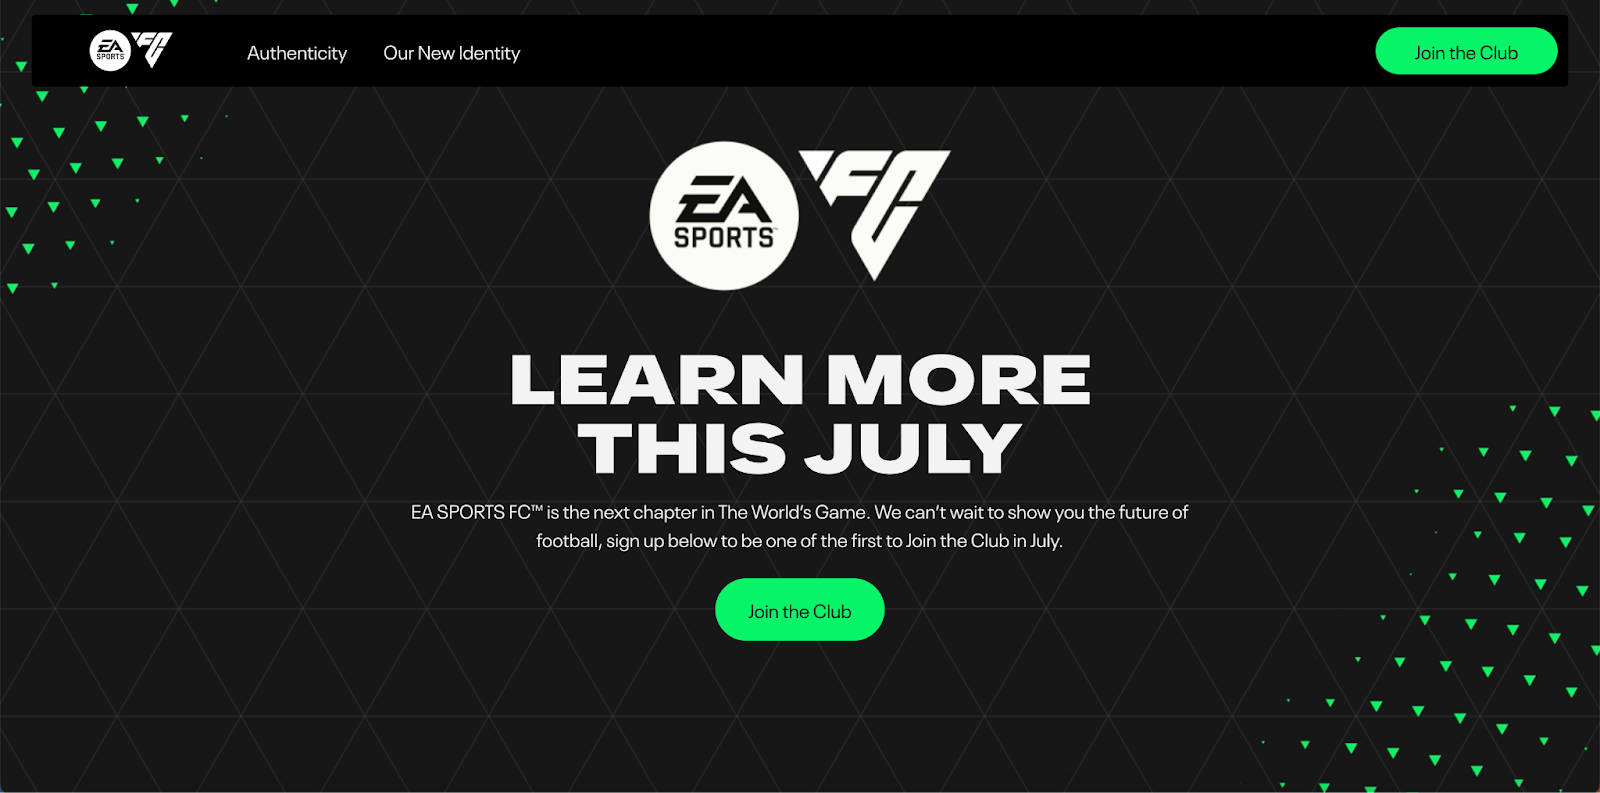 FUTZone - EA SPORTS FC News 🔺 on X: 🚨BREAKING: It looks the